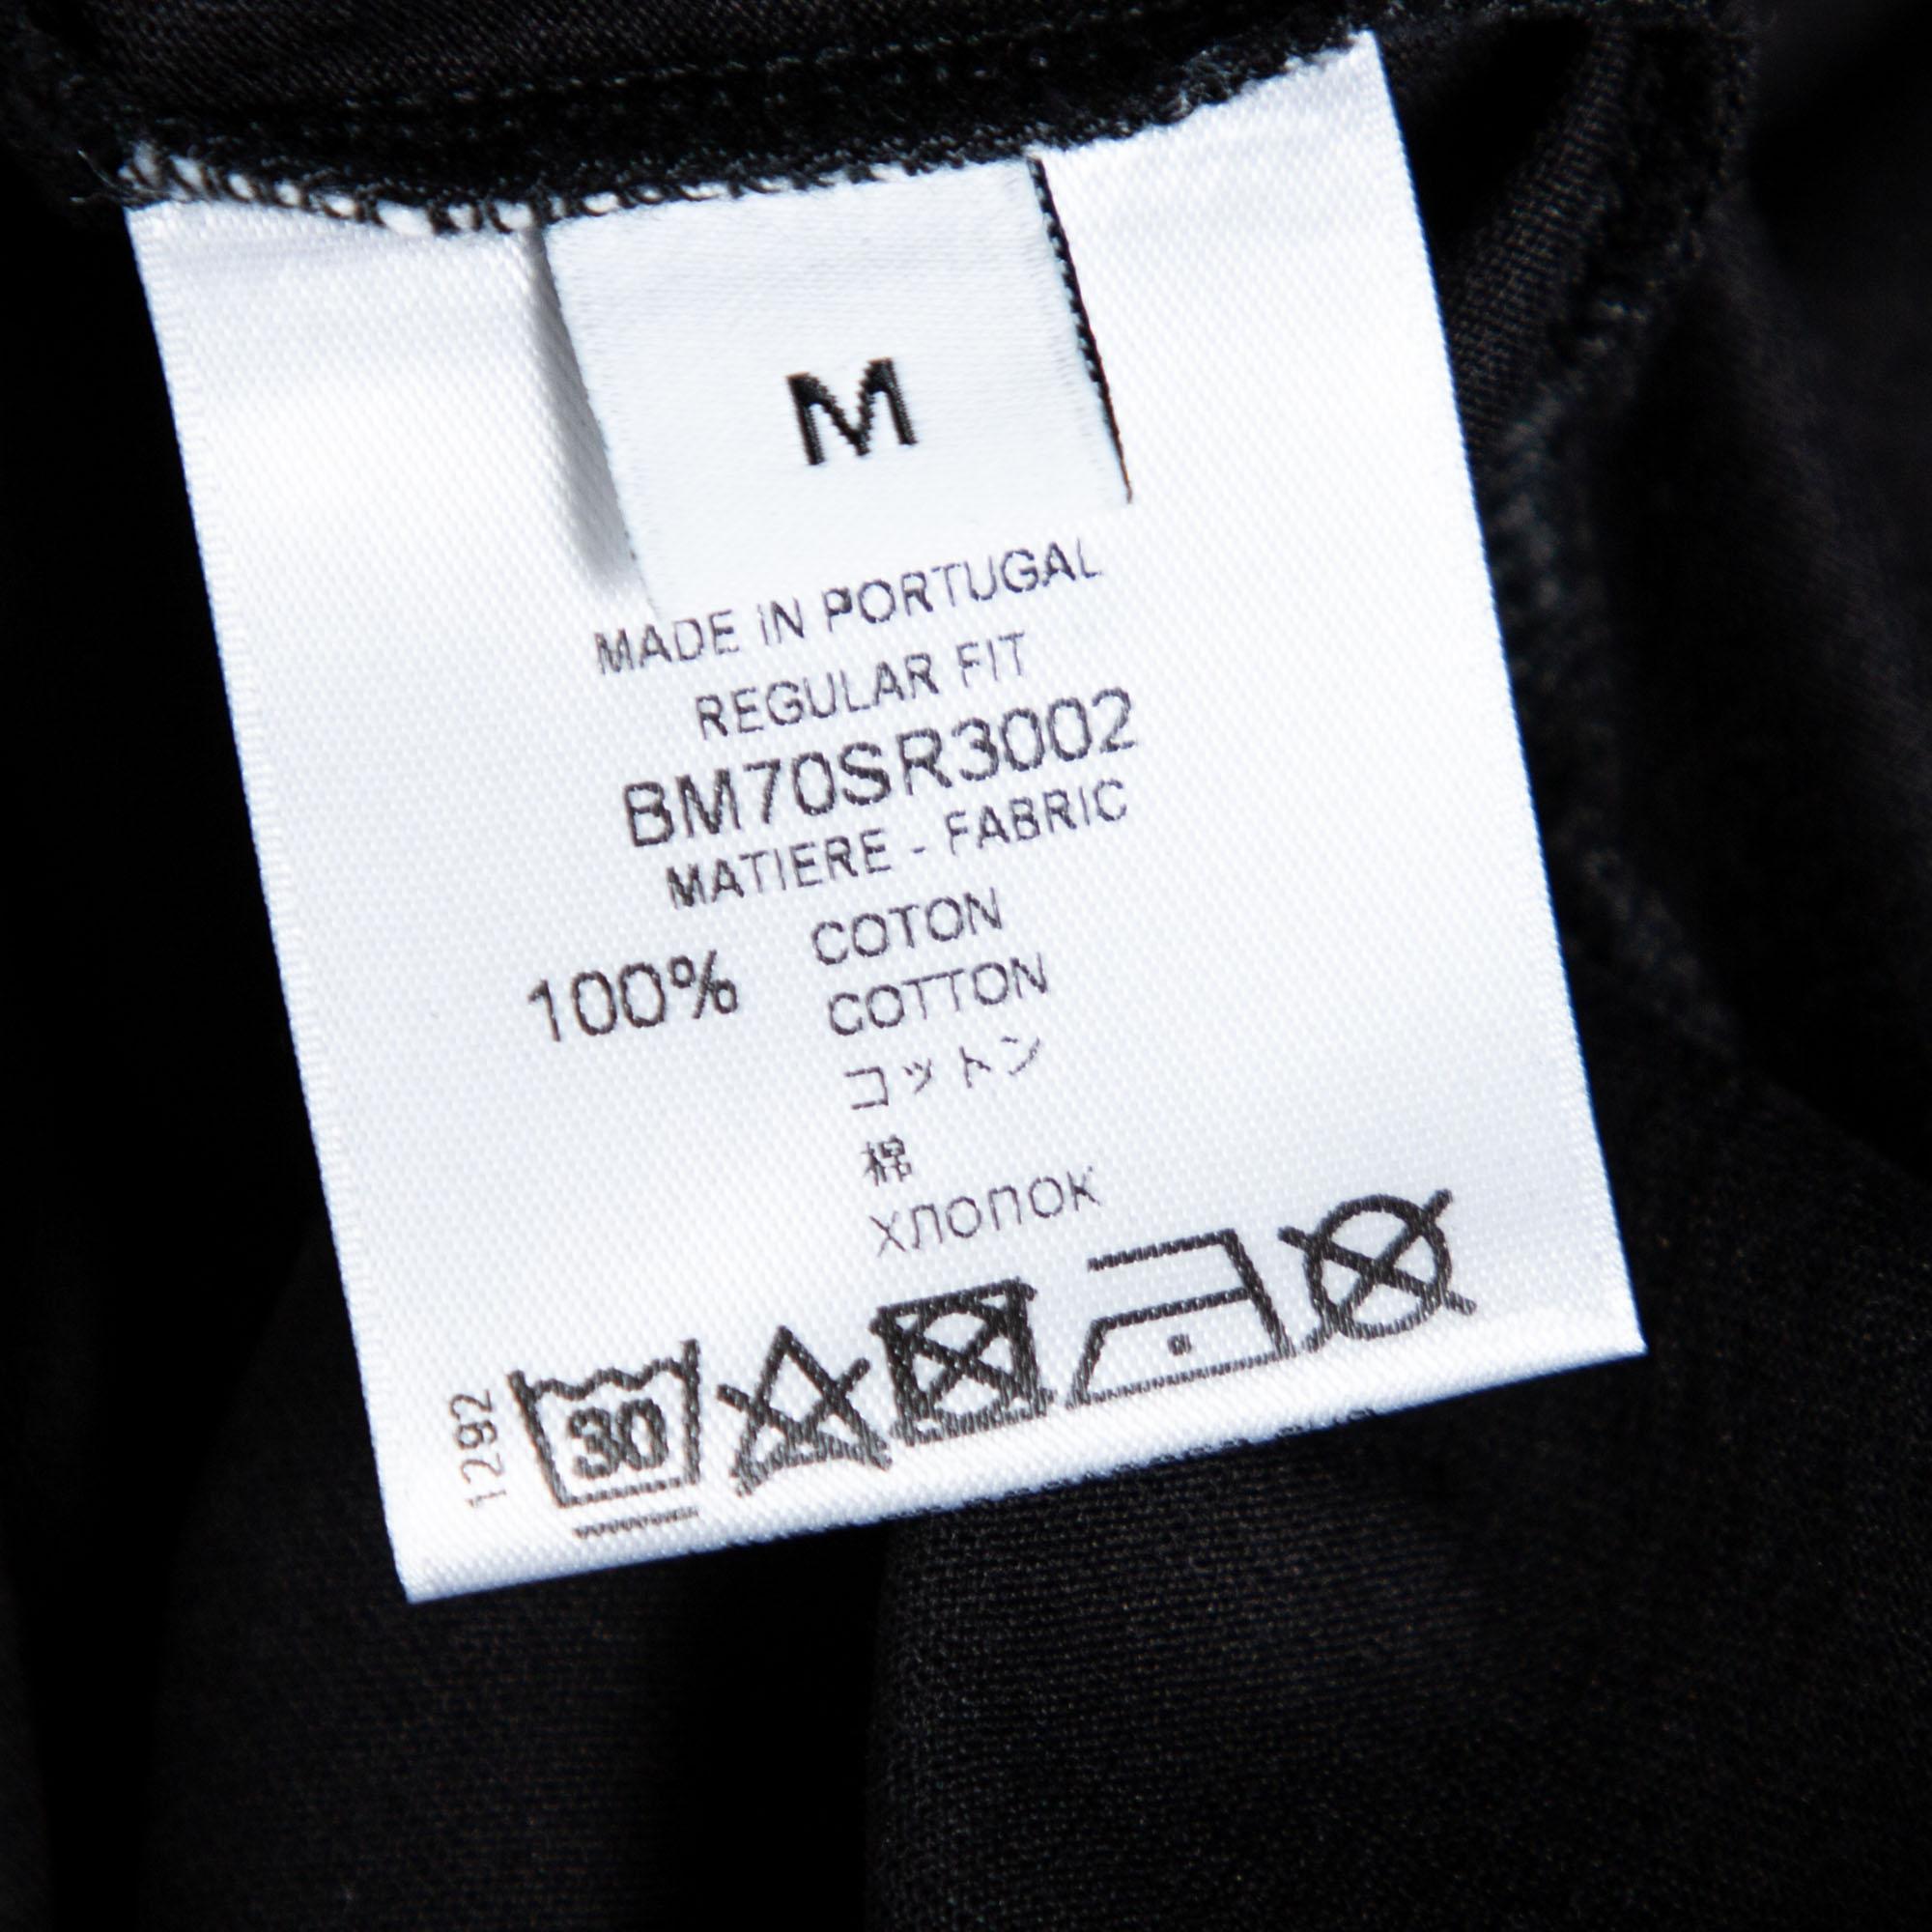 Men's Givenchy Black Ice Bear Logo Printed Cotton T-Shirt L